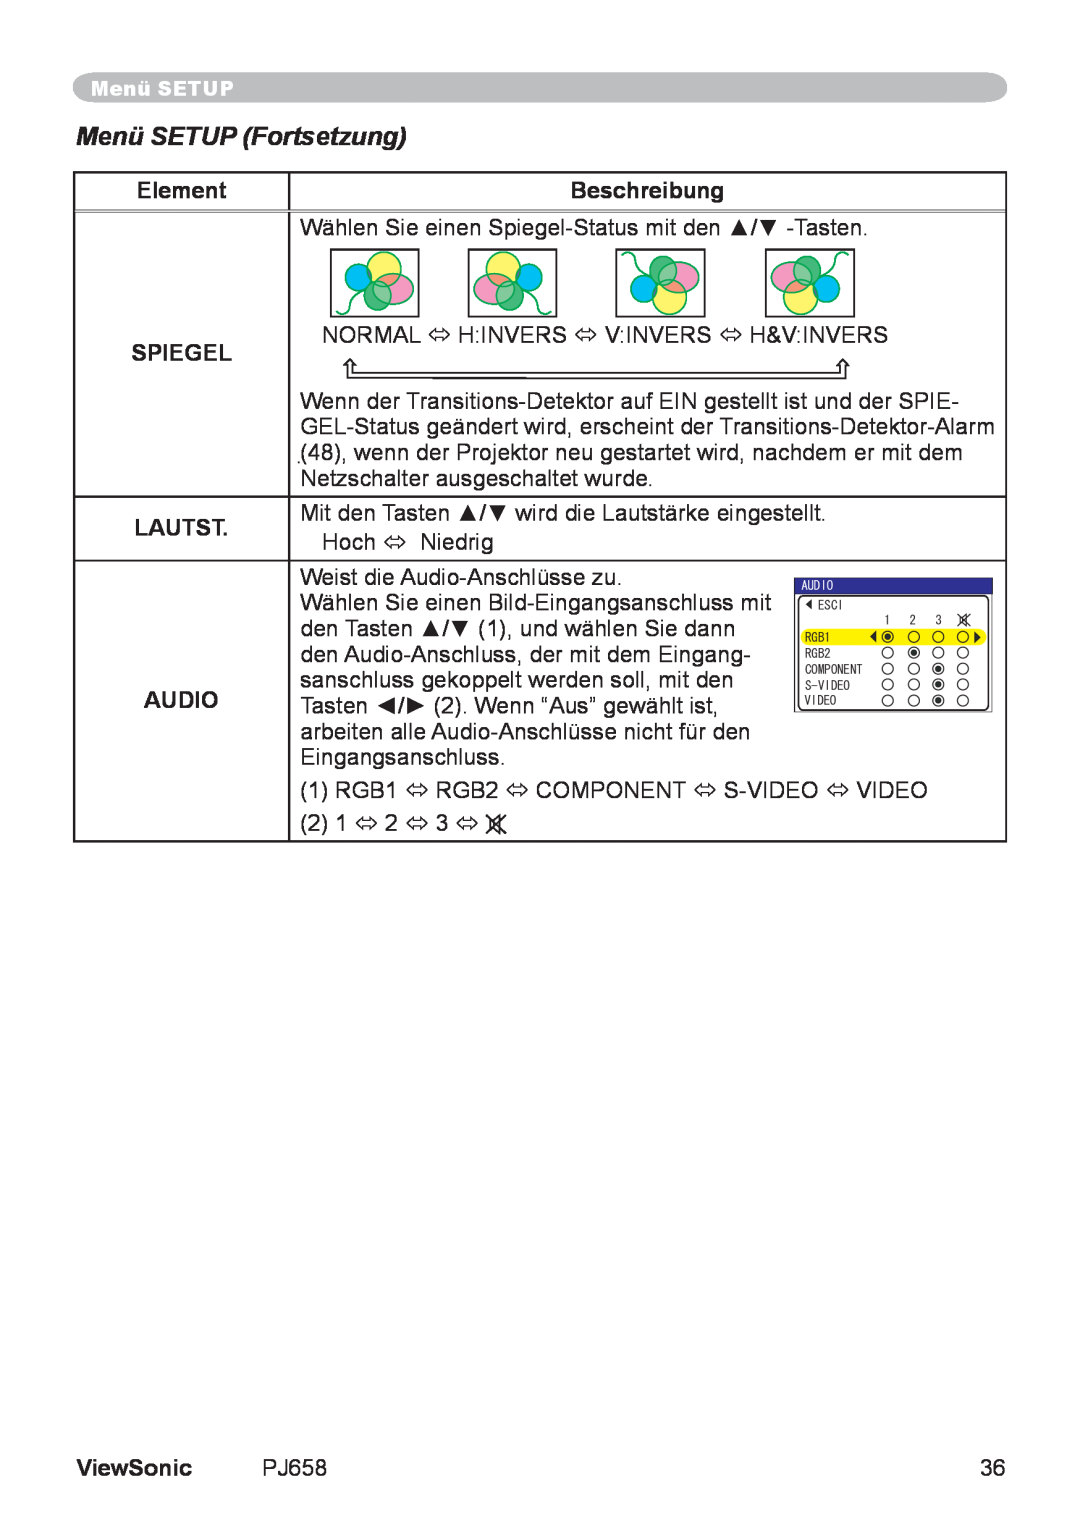 ViewSonic VS11361 manual Menü SETUP Fortsetzung, Element, Beschreibung, Spiegel, Lautst, Audio, ViewSonic 